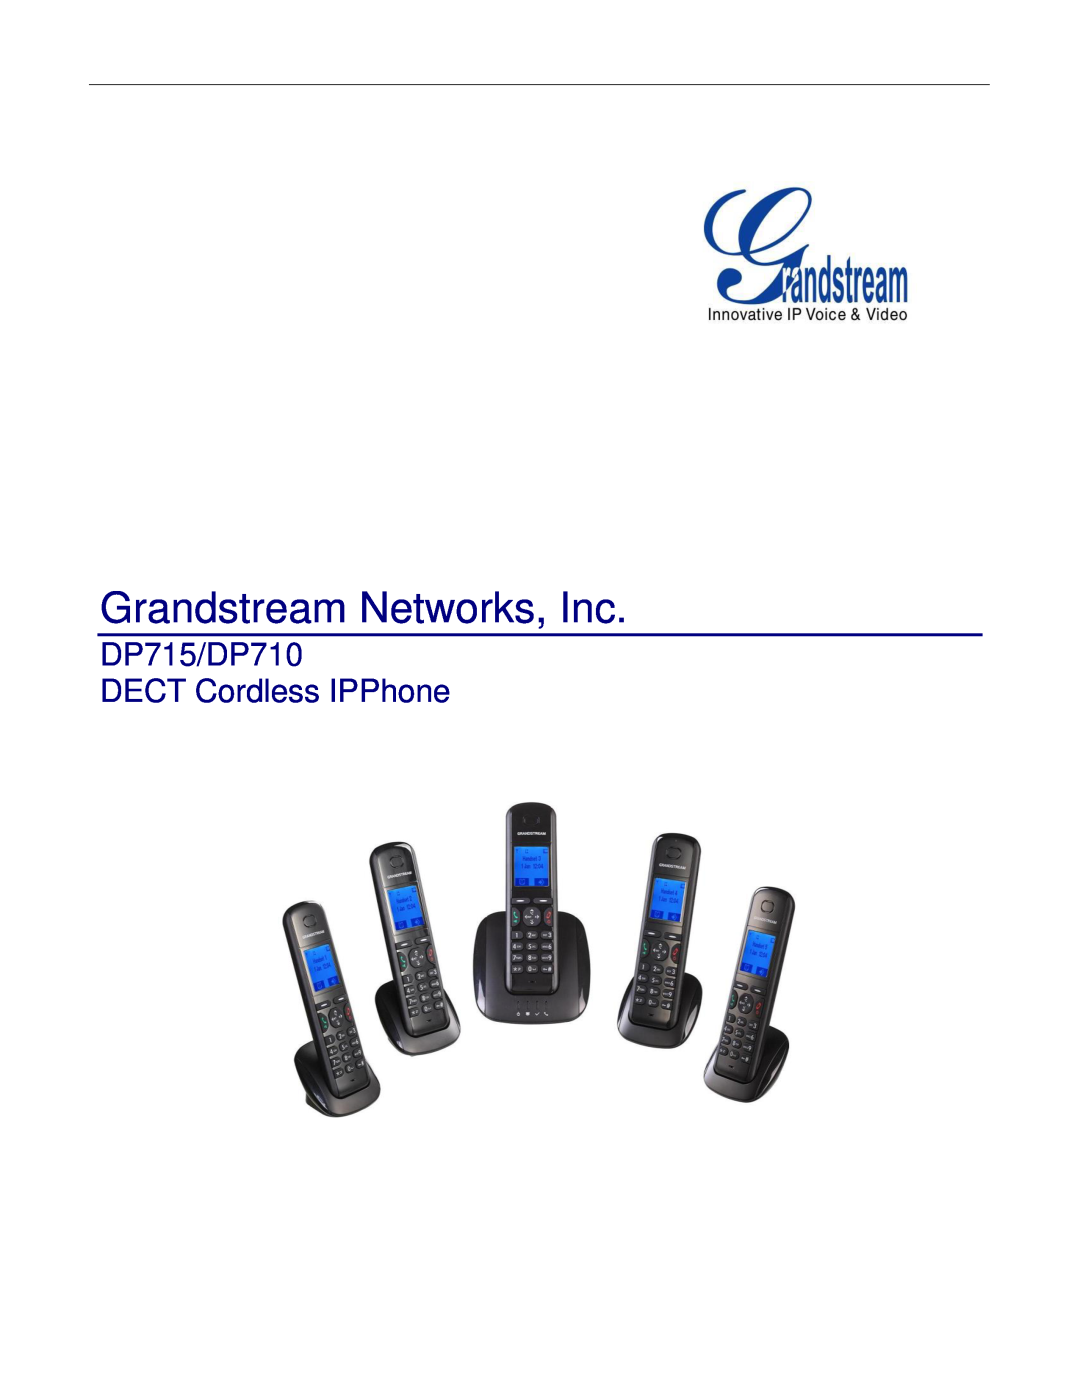 Grandstream Networks manual Grandstream Networks, Inc, DP715/DP710 DECT Cordless IPPhone 